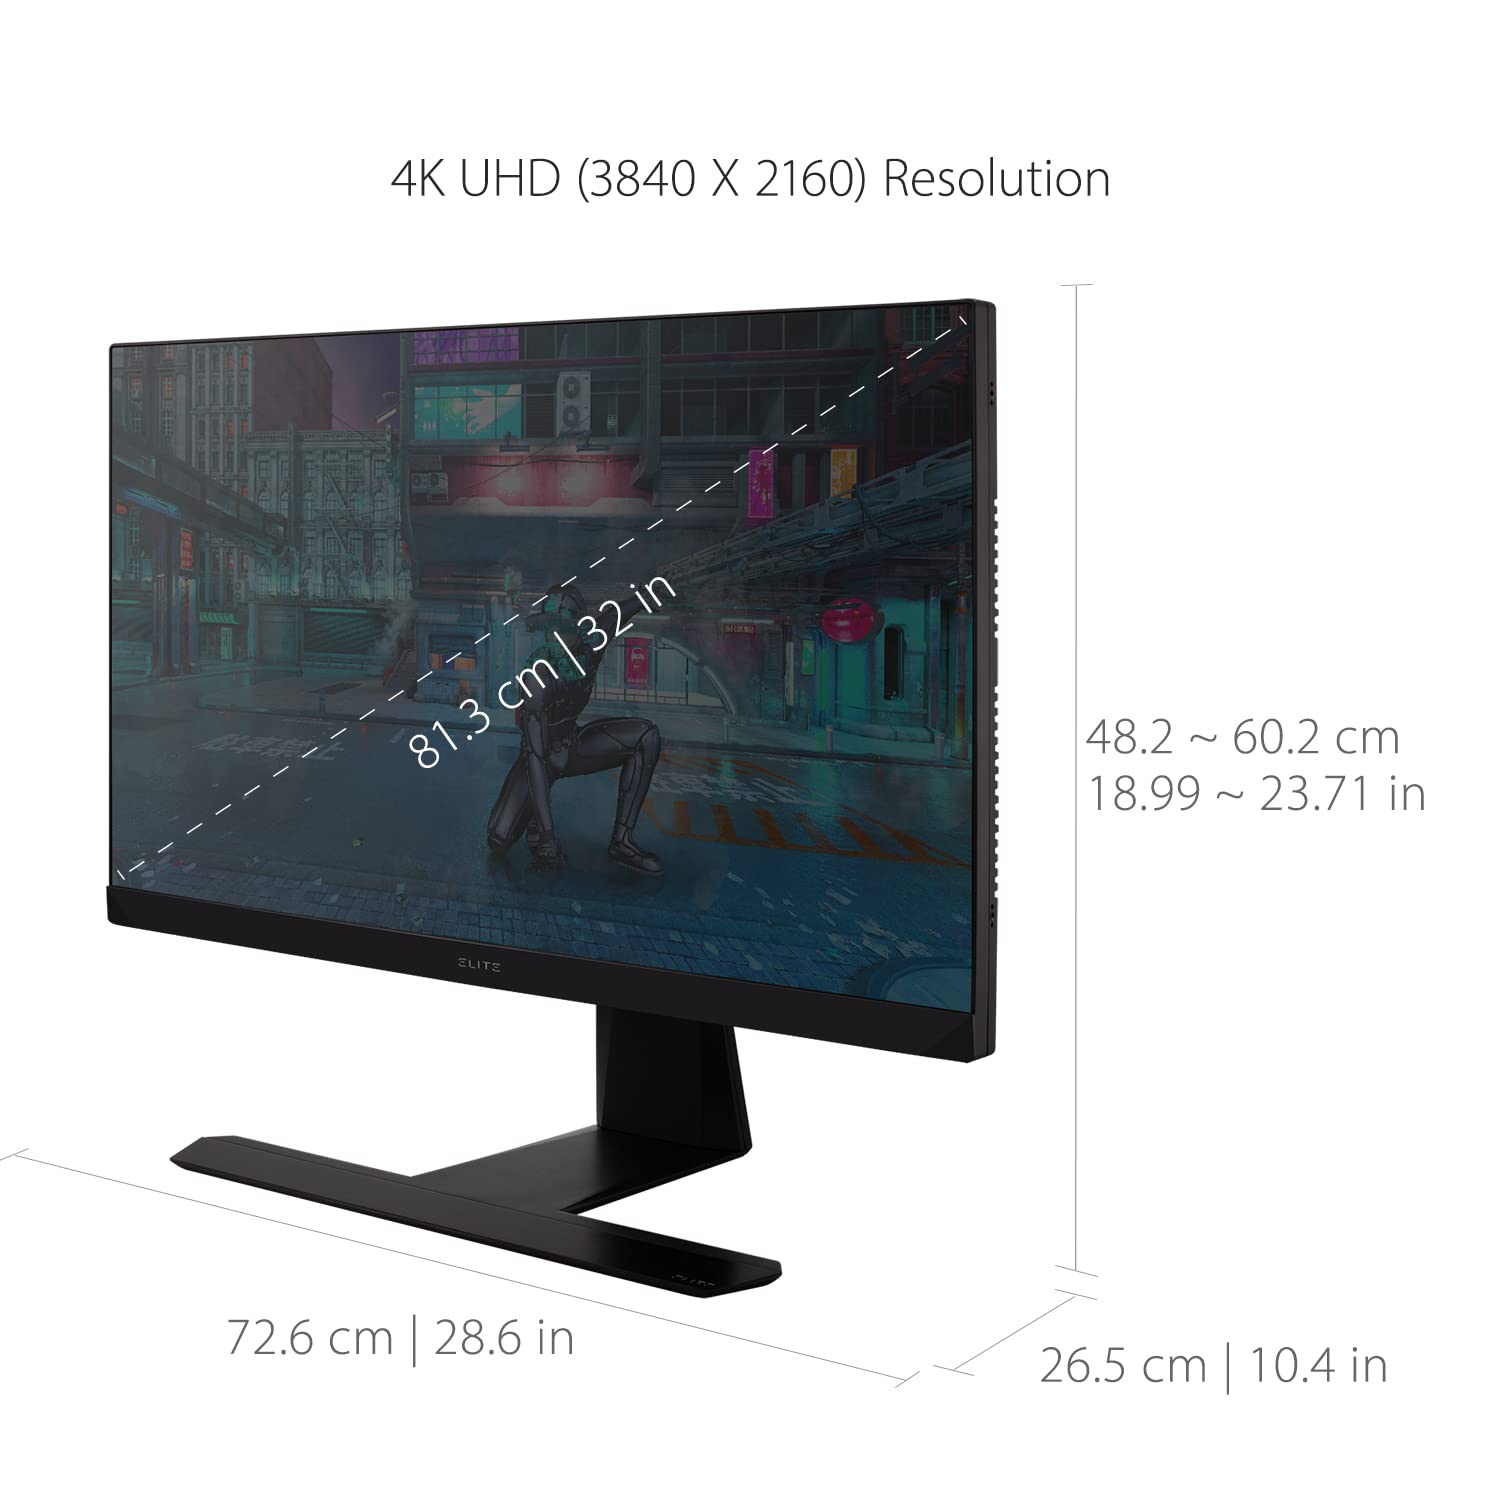 ViewSonic ELITE XG321UG 32 Inch 4K IPS 144Hz Gaming Monitor with G-Sync, Mini LED, Nvidia Reflex, HDR1400, Advanced Ergonomics, HDMI and DP for Esports,Black